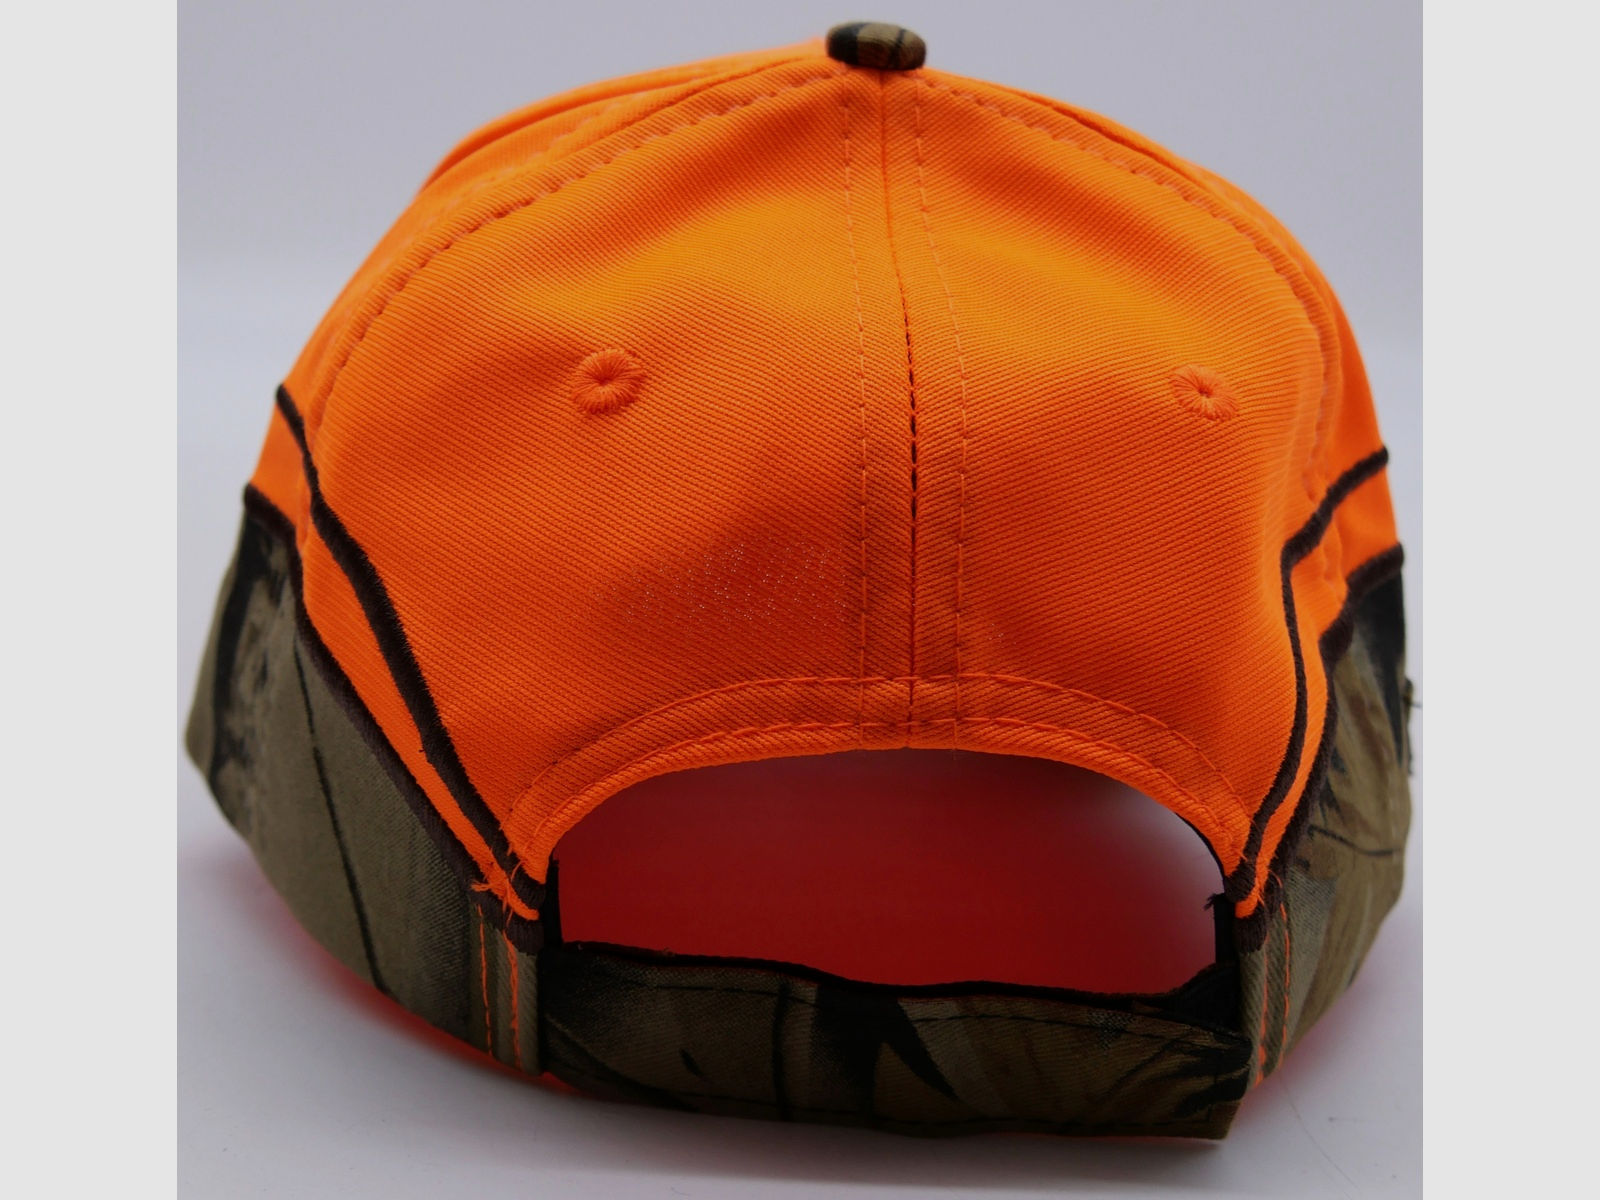 Leica Base Cap, Kappe, Mütze Jäger Sportoptik Orange